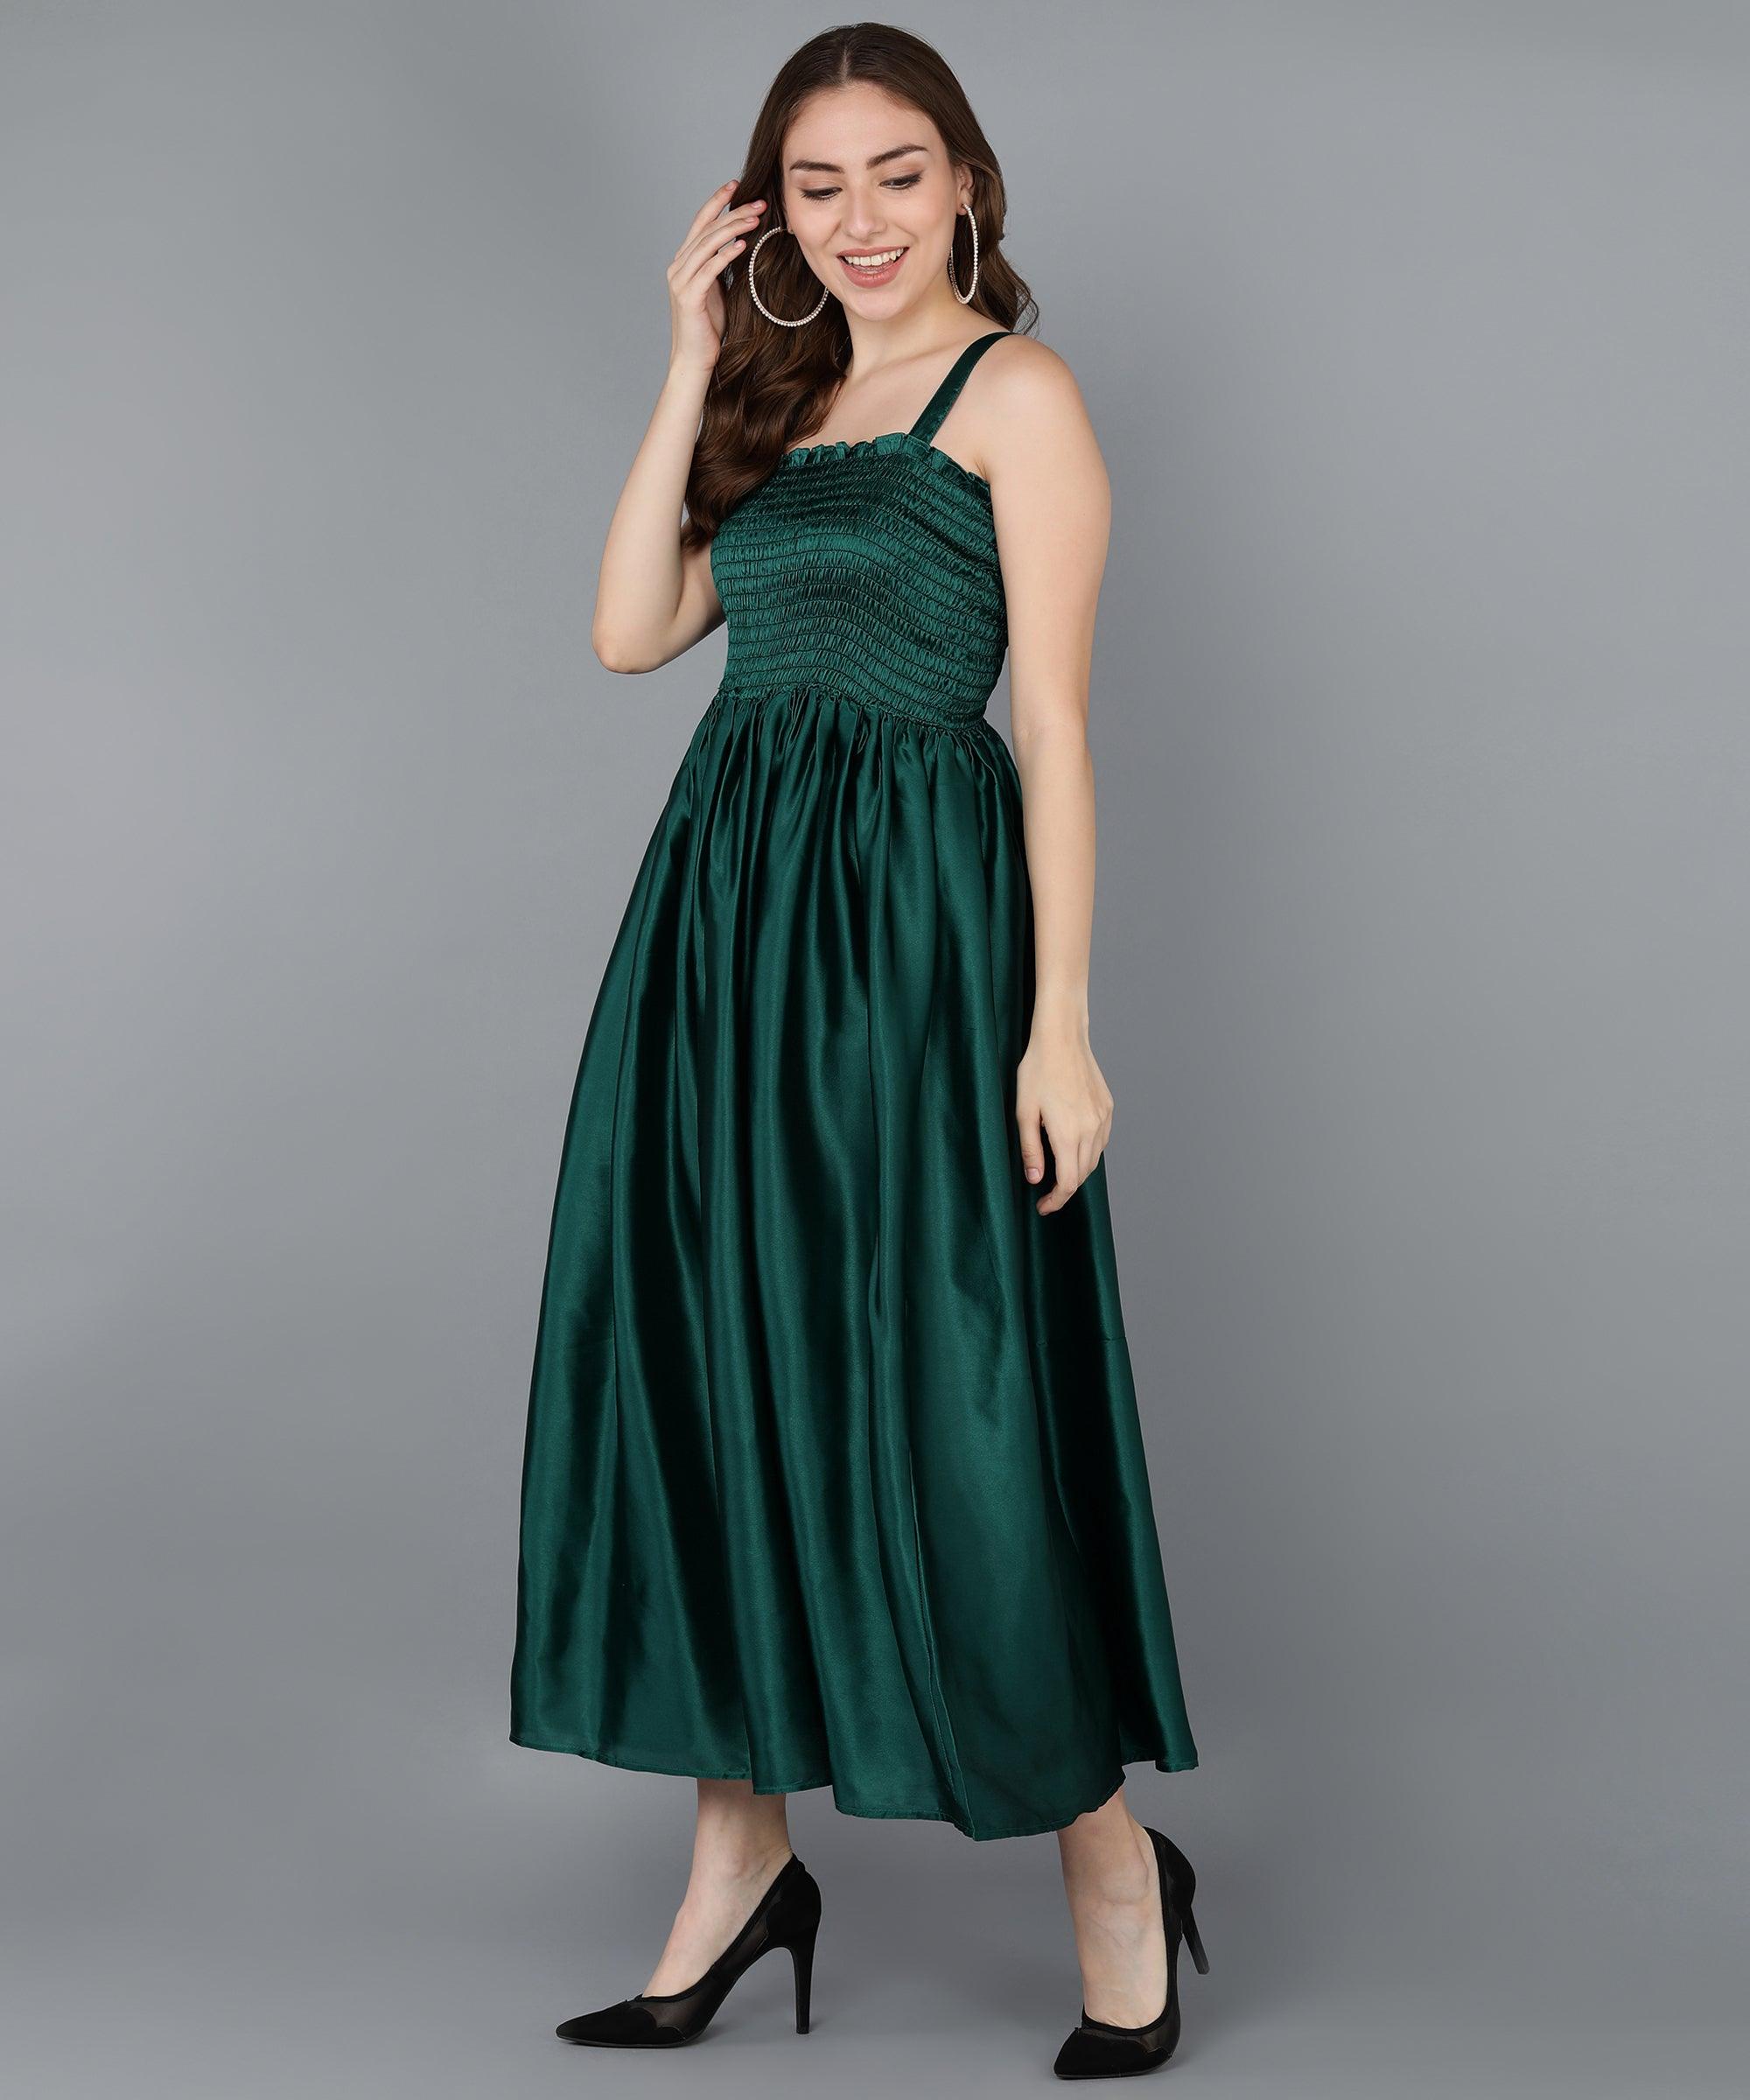 Green Satin Smorking Dress - Znxclothing